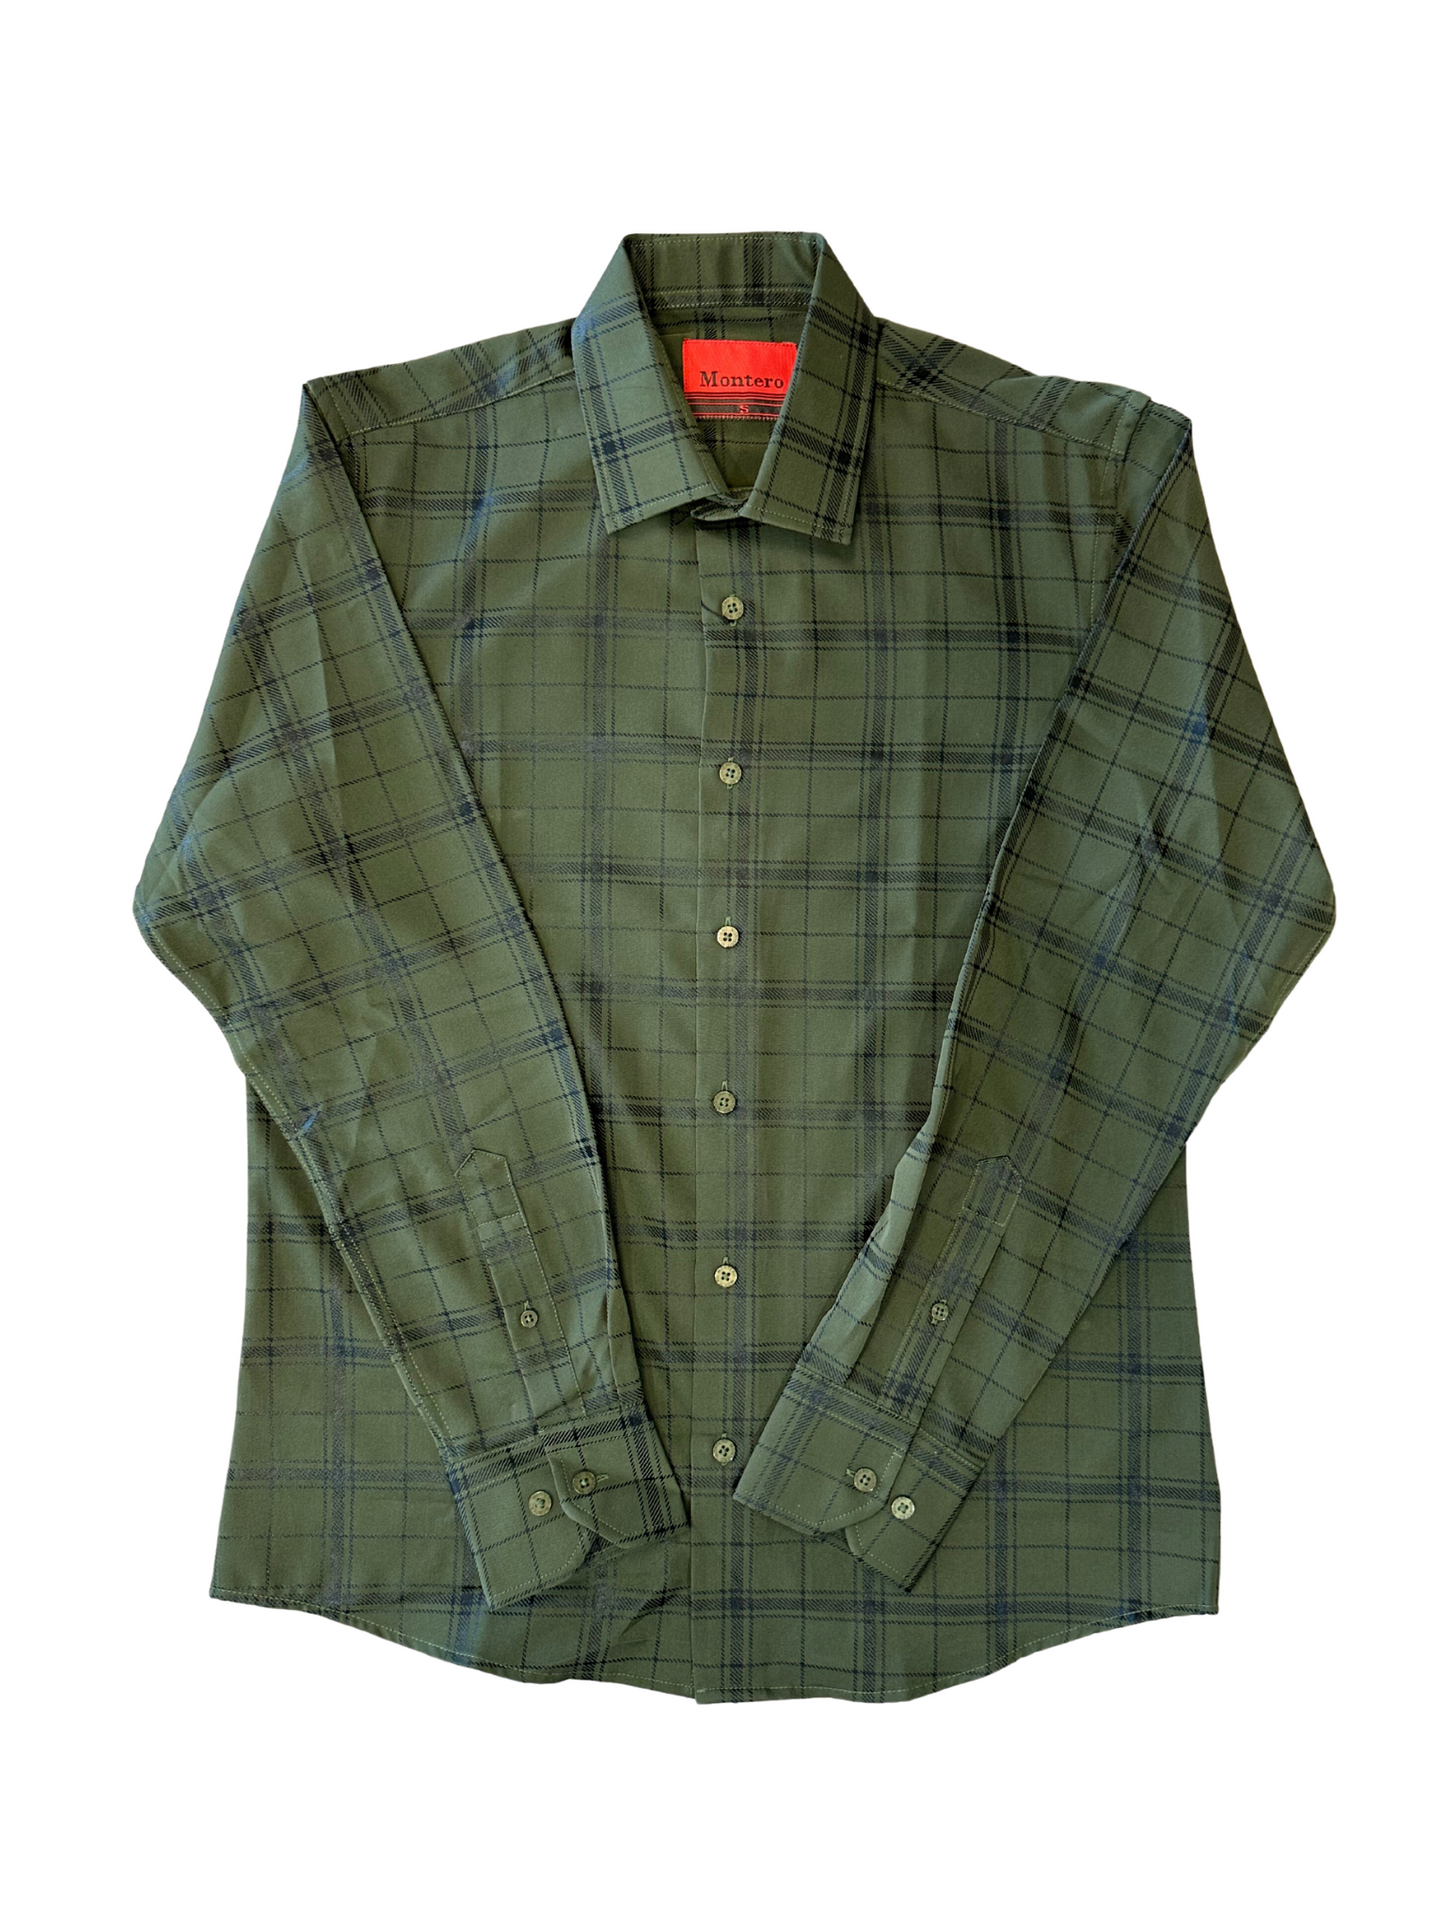 Men's Forest Green Plaid Button Down Shirt